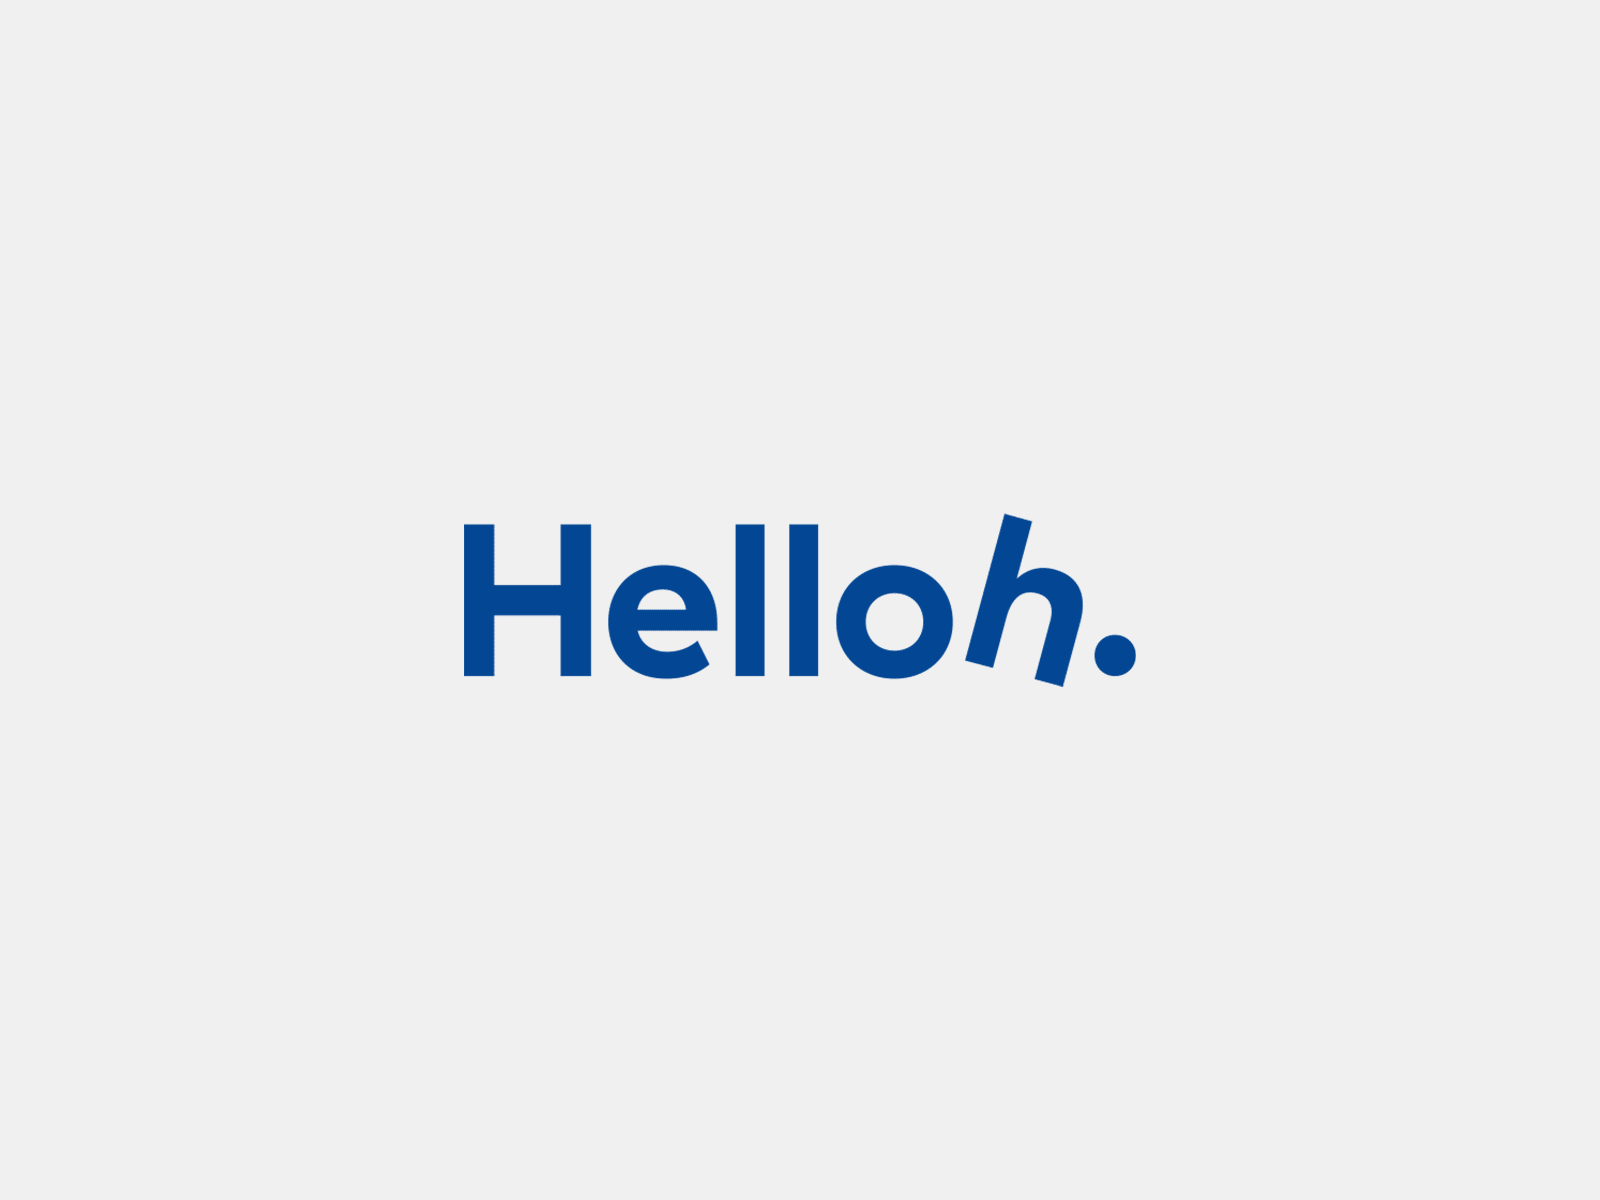 Helloh. design logo logotype typography